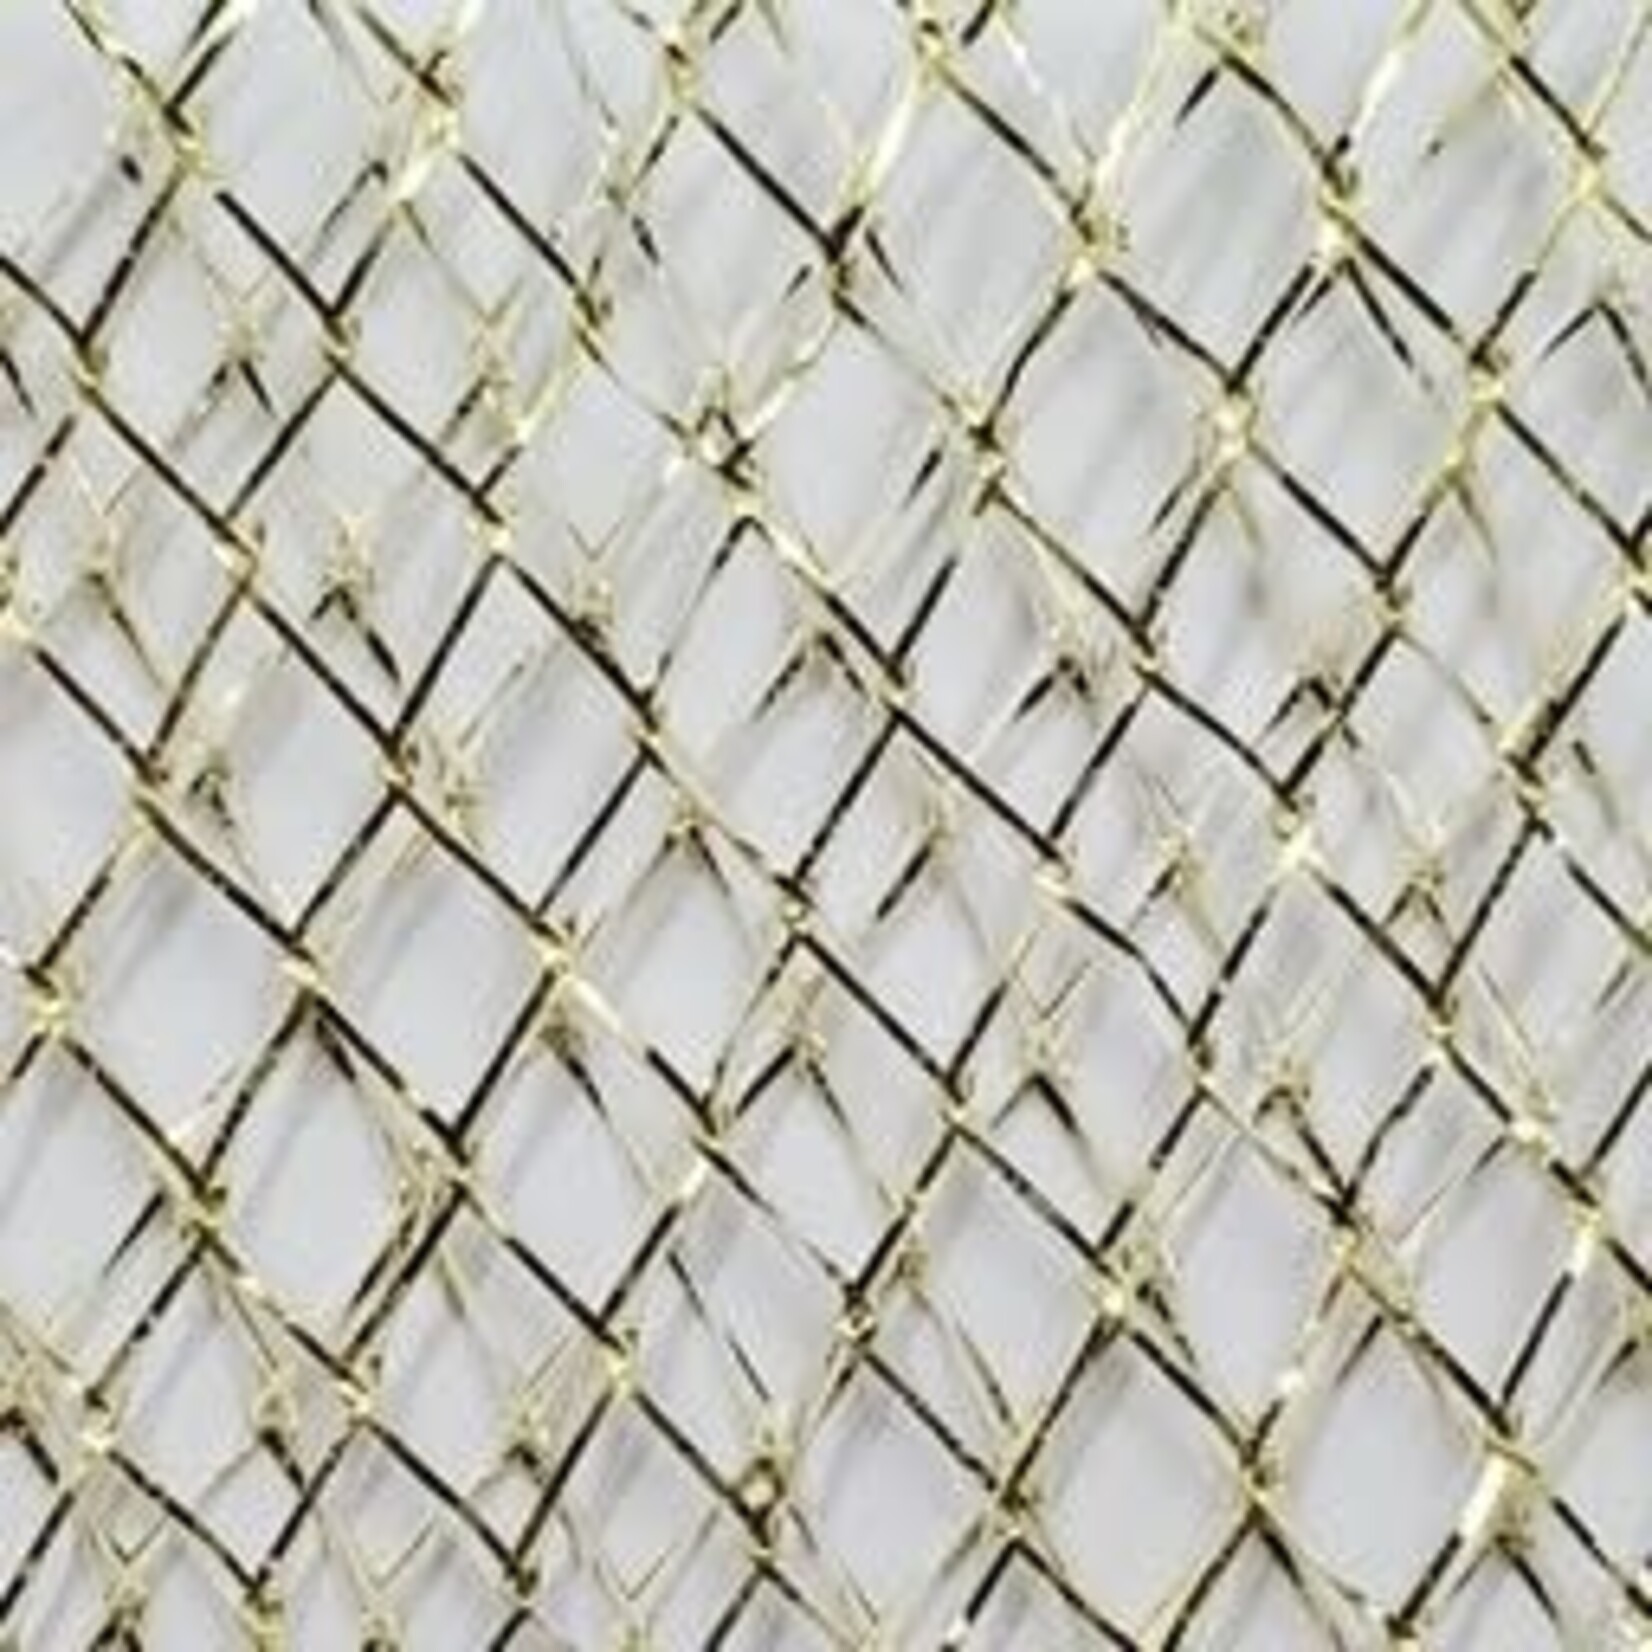 Shiny Diamond Netting 58-60 Inches Gold